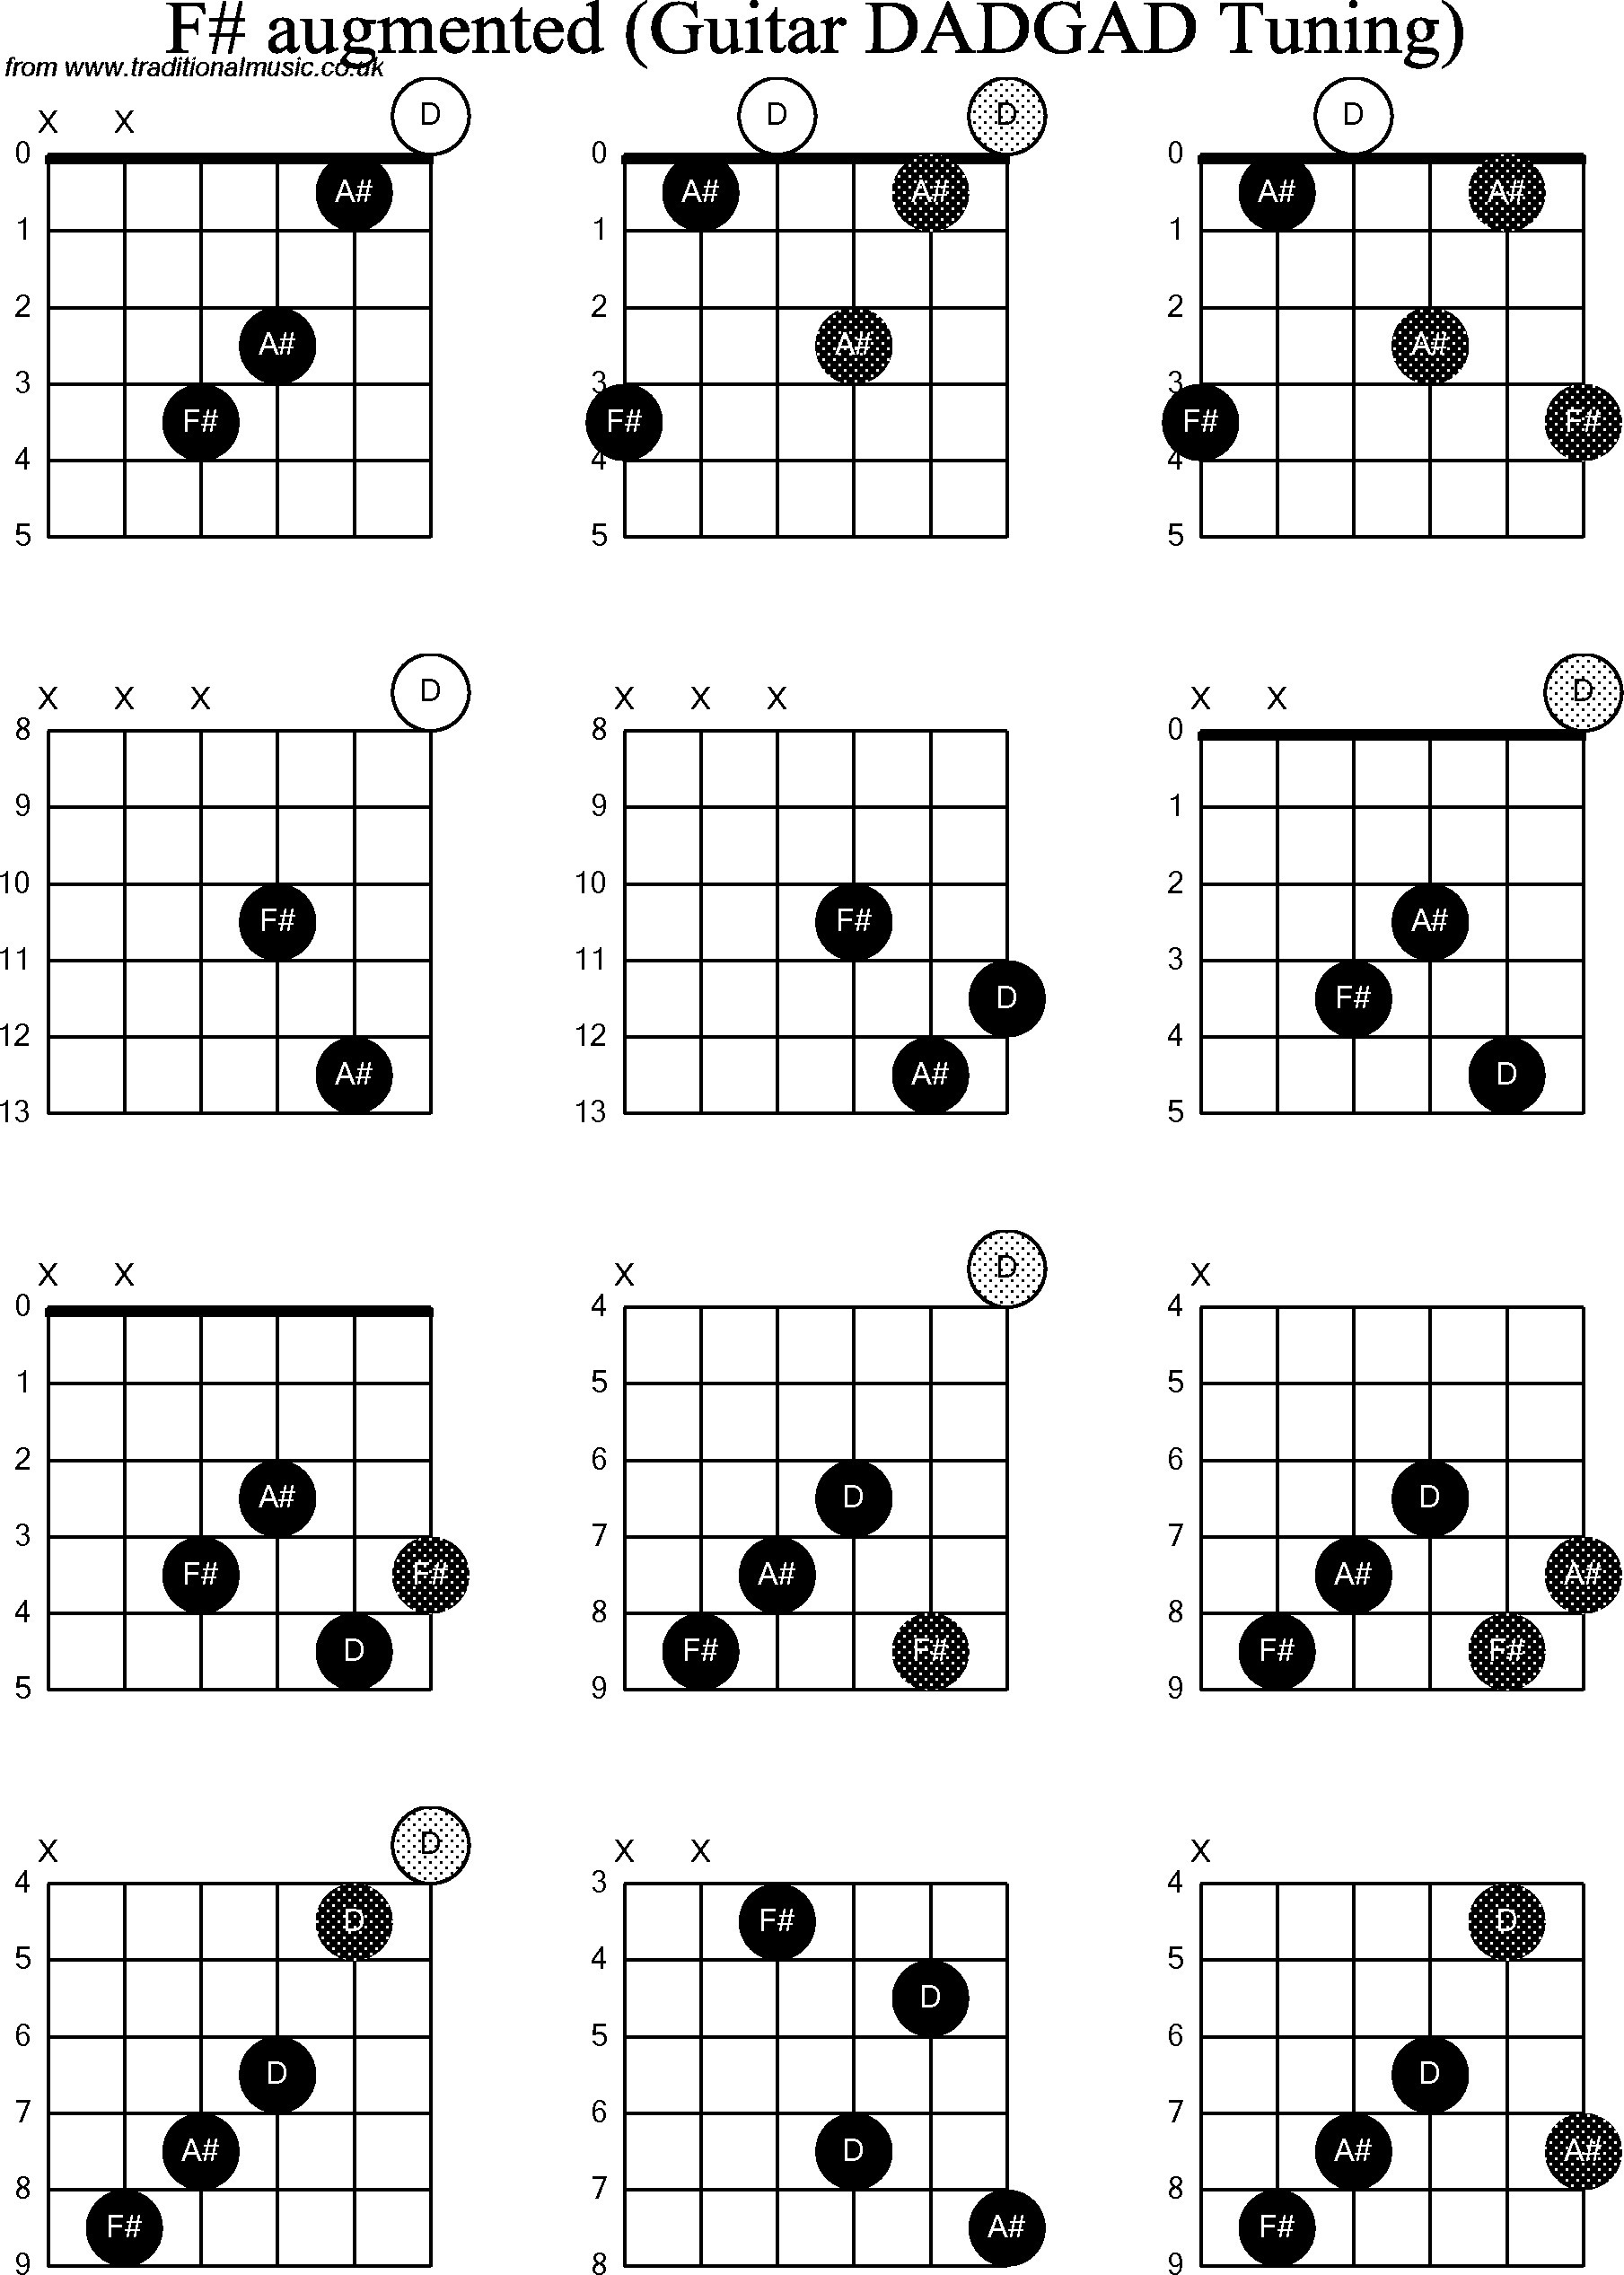 Chord Diagrams for D Modal Guitar(DADGAD), F Sharp Augmented